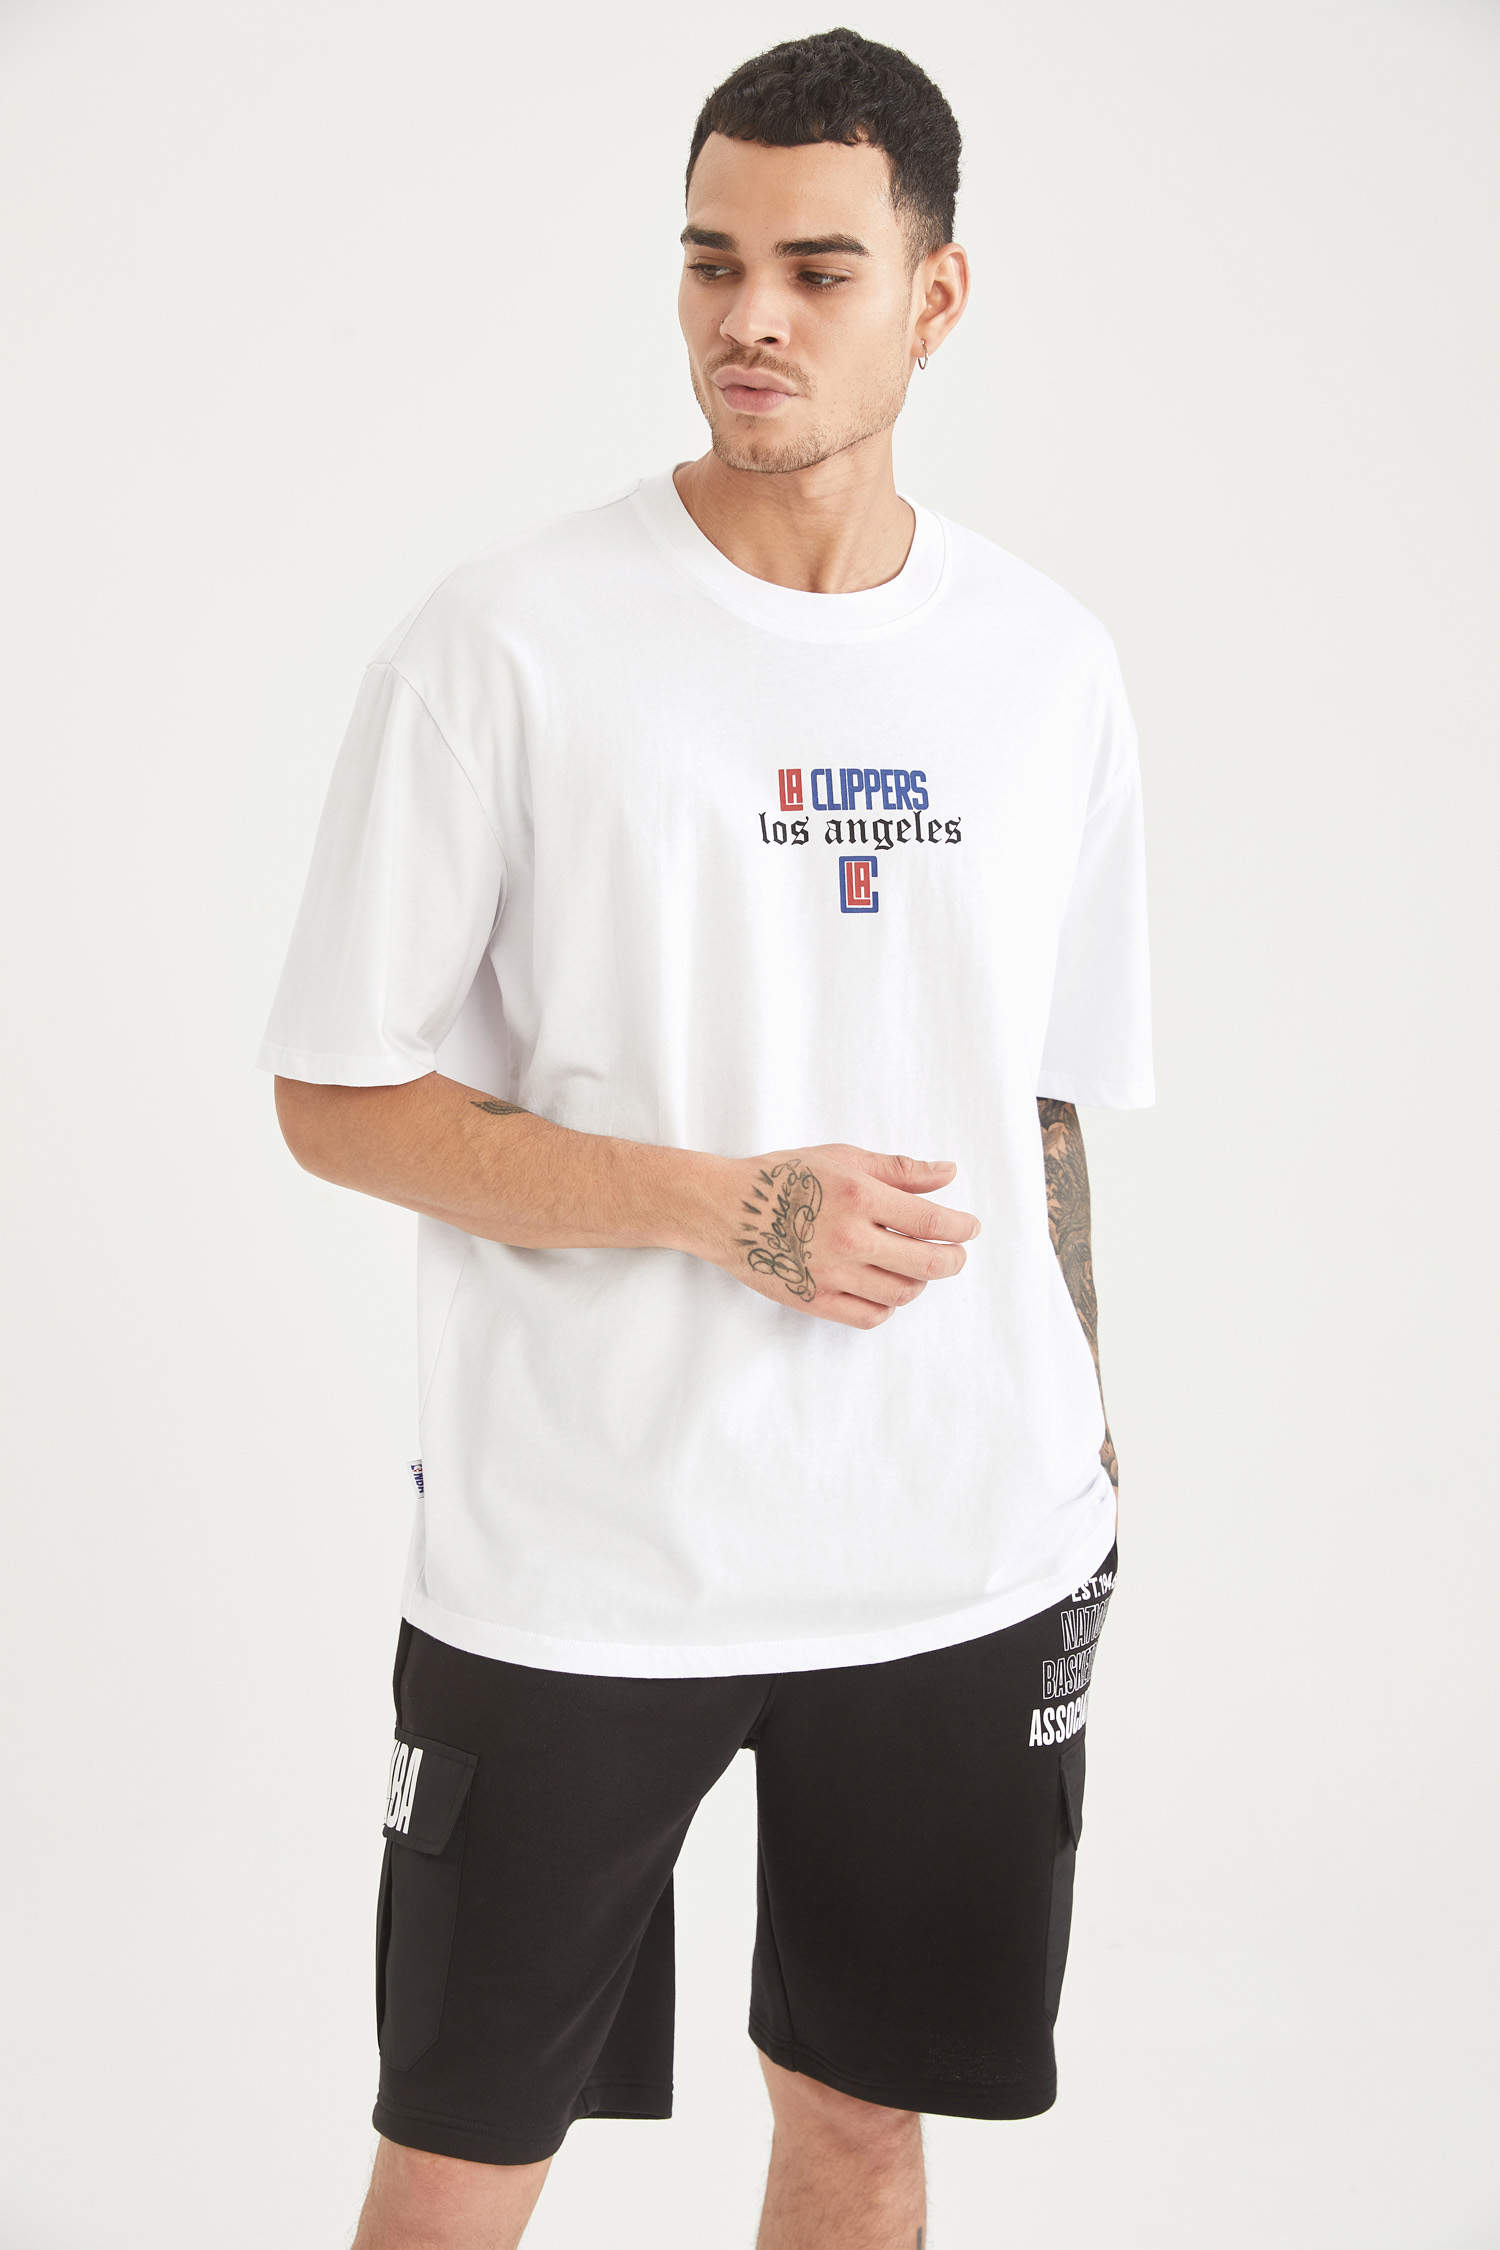 ابغى ابغى NBA Los Angeles Clippers Licensed Oversize Fit Crew Neck Short Sleeve  T-Shirt ابغى ابغى